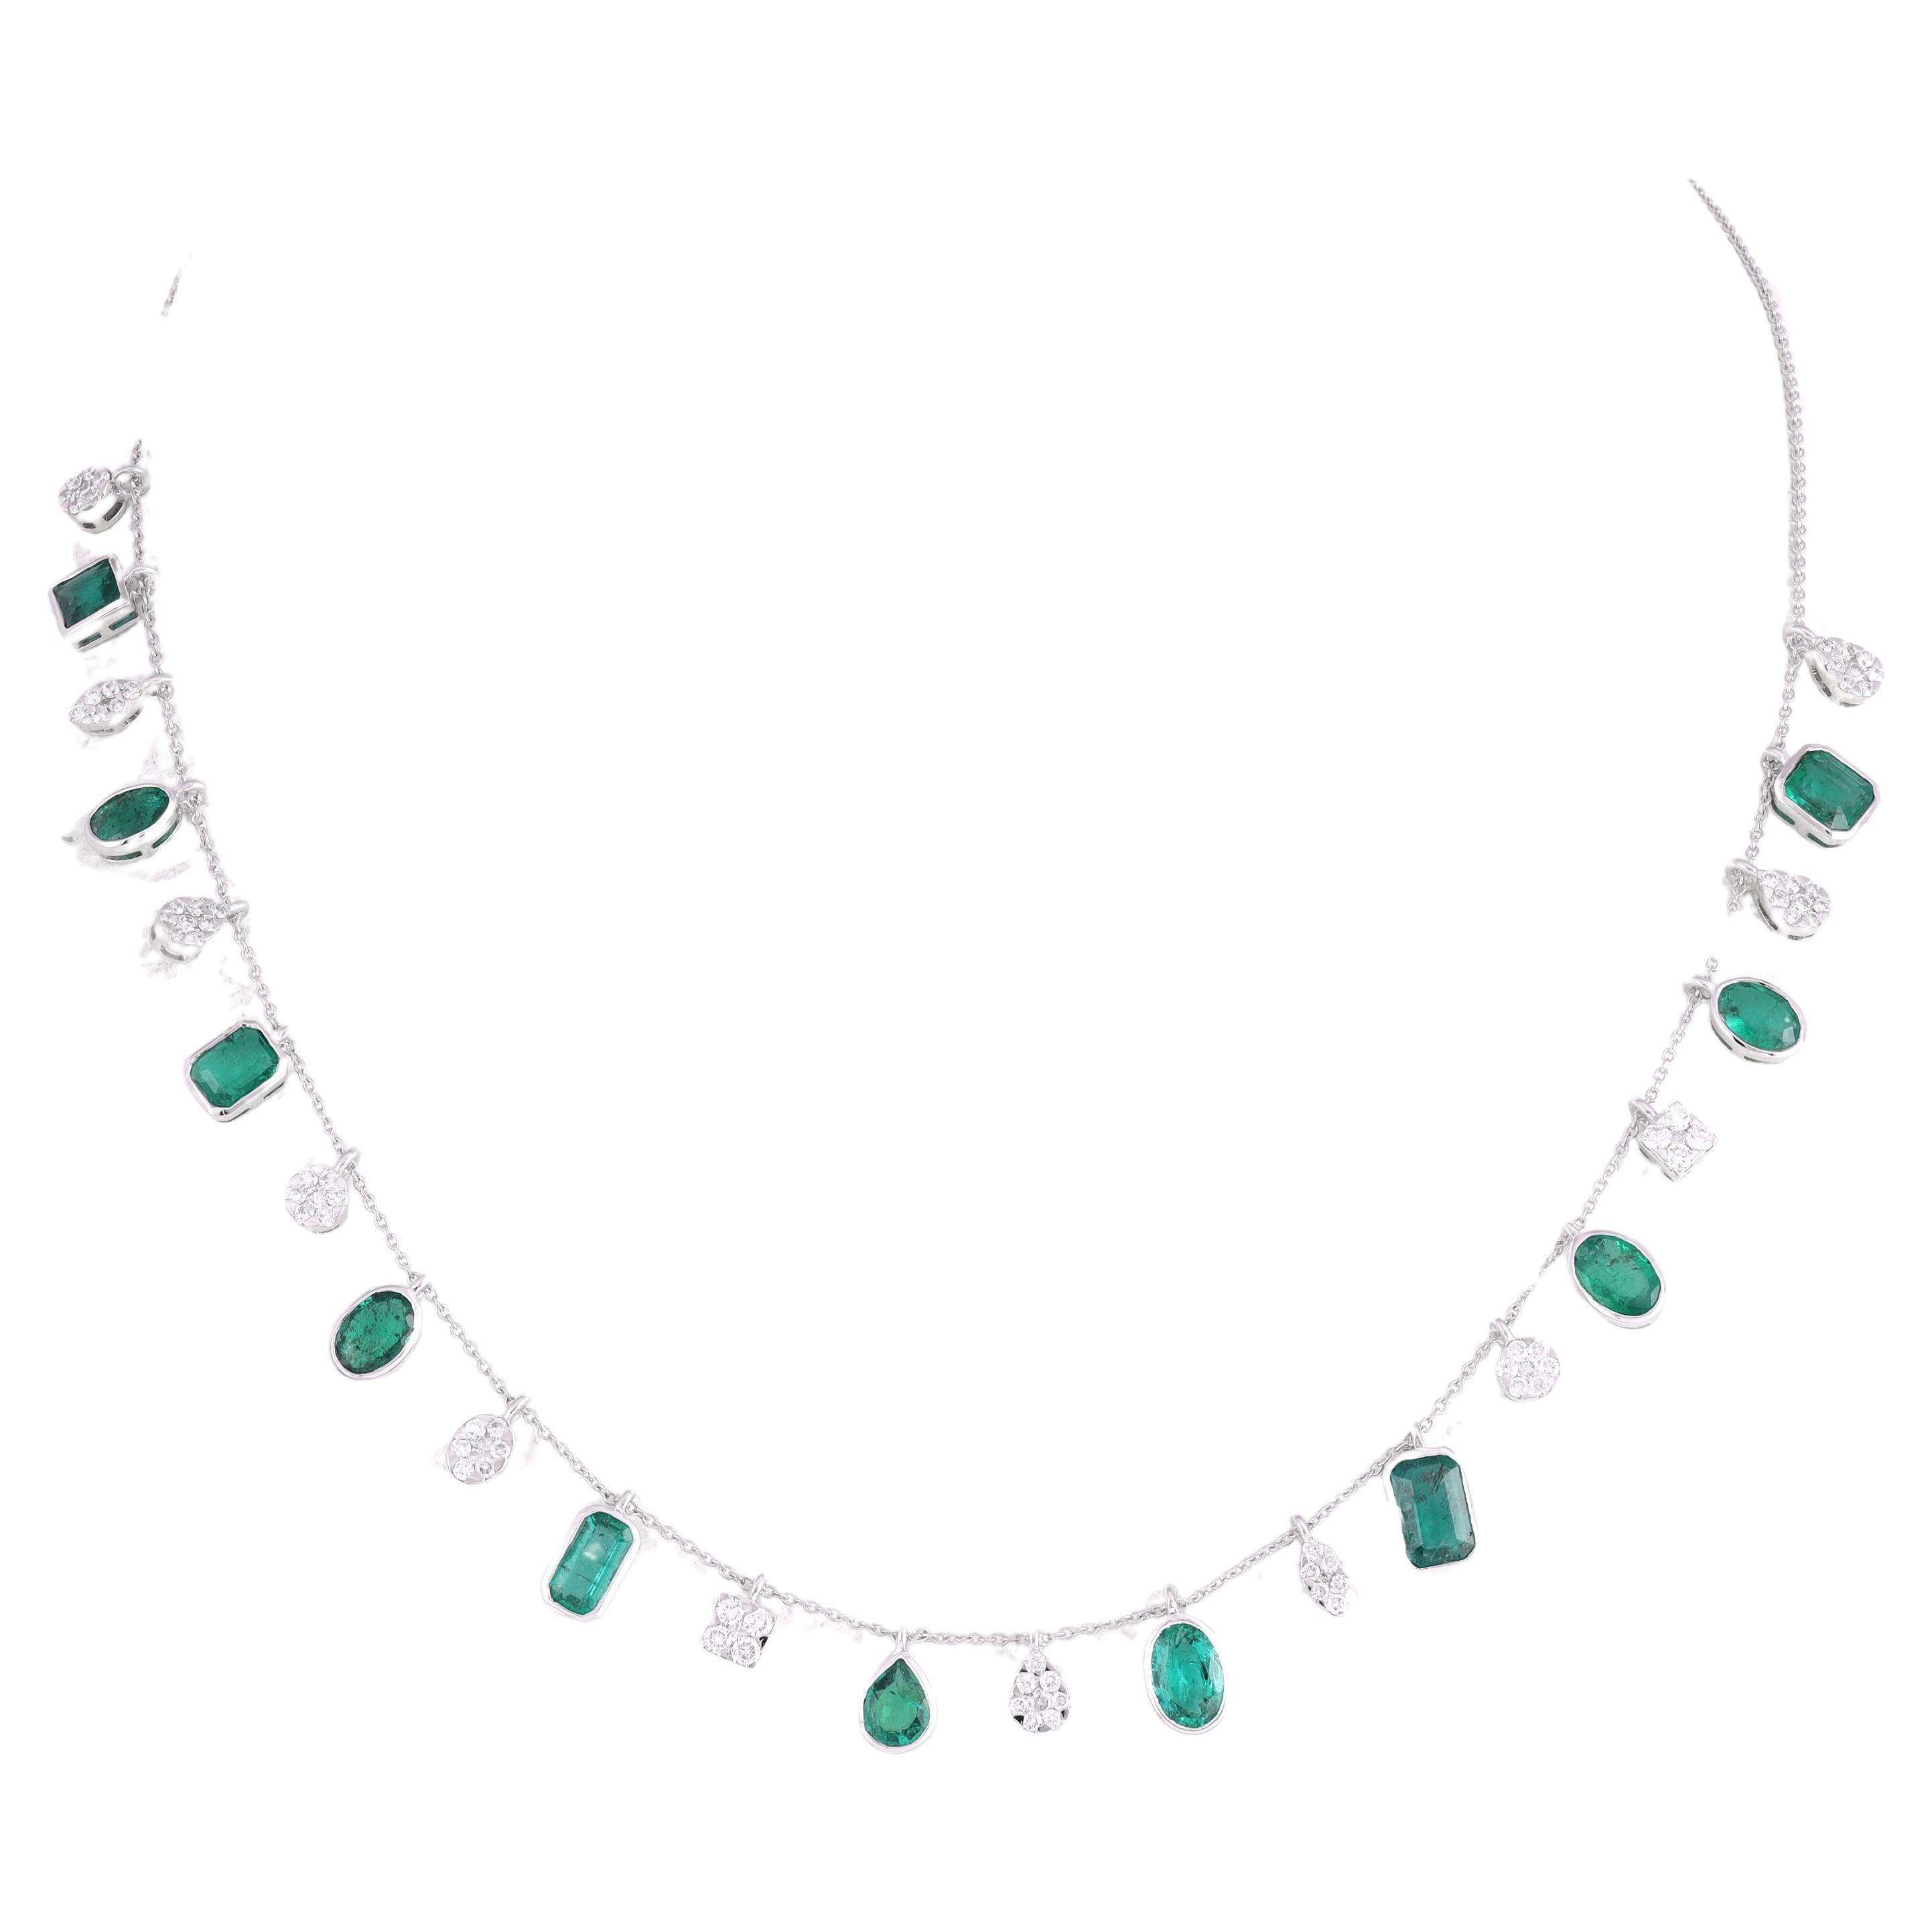  7.34 Carat Emerald & Diamond Chain Necklace in 18k White Gold For Sale